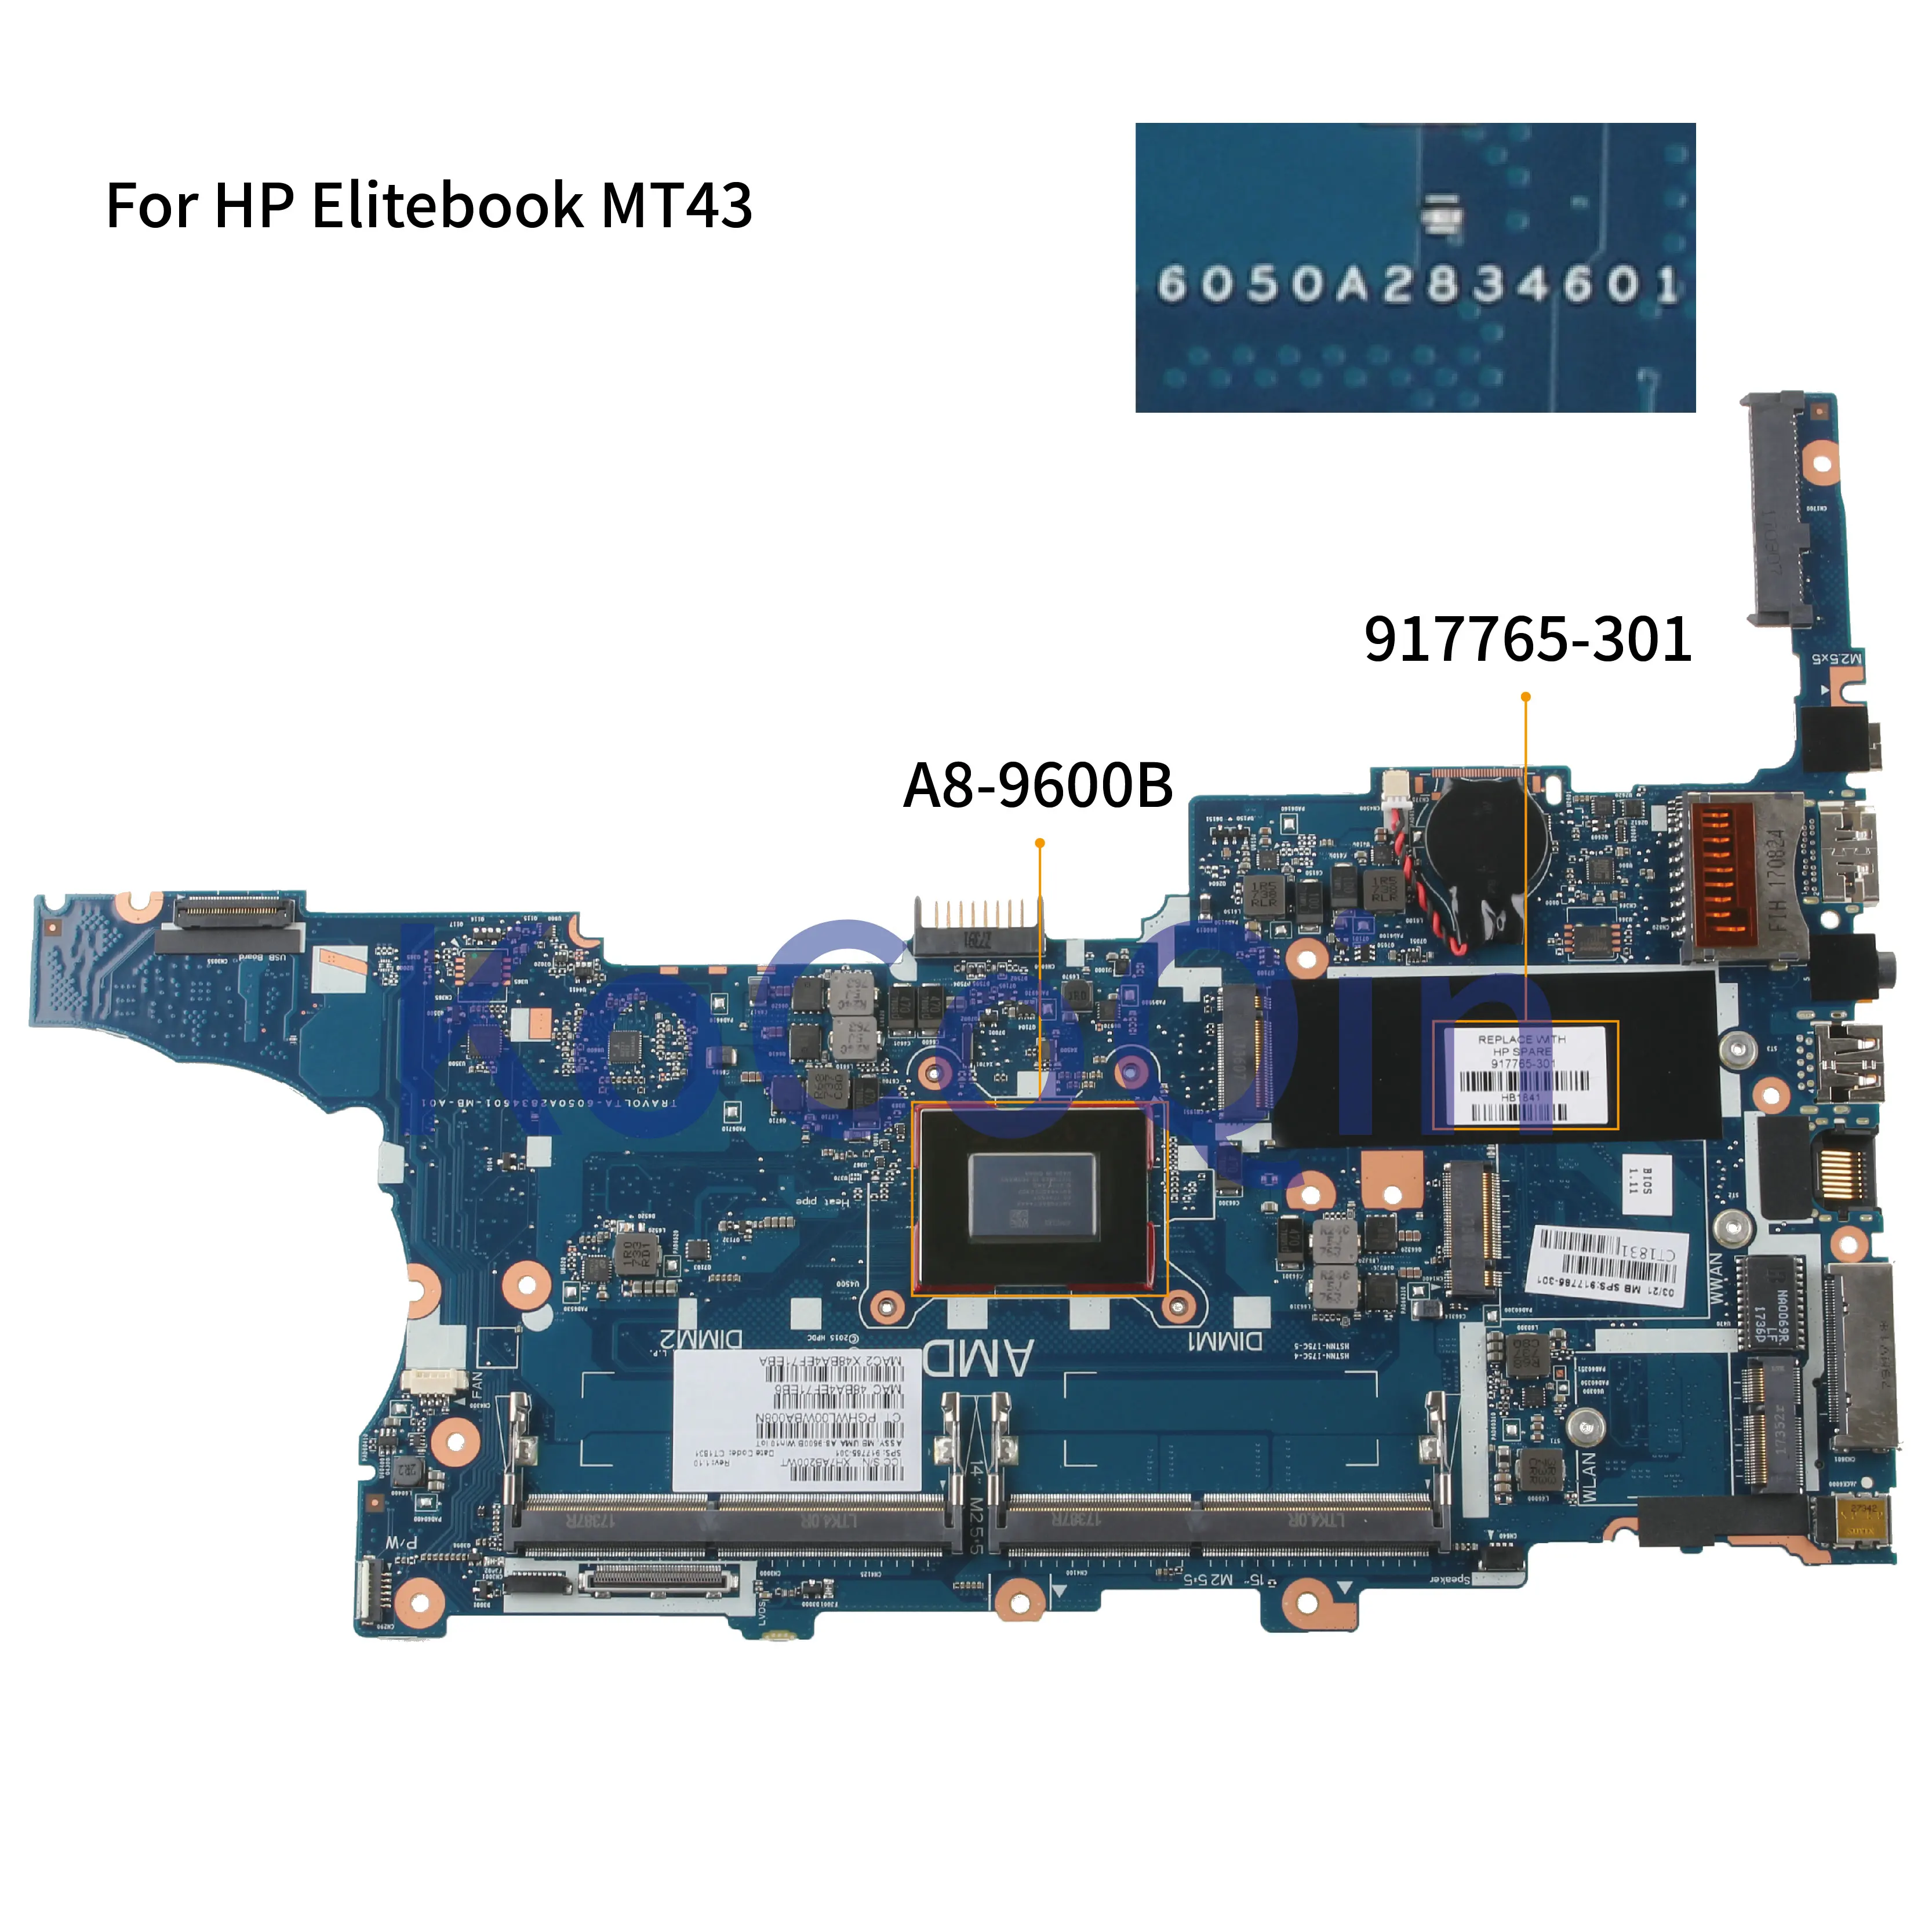 Deals  KoCoQin Laptop motherboard For HP Elitebook 745 G4 MT43 Mainboard 917765-001 917765-601 6050A283460